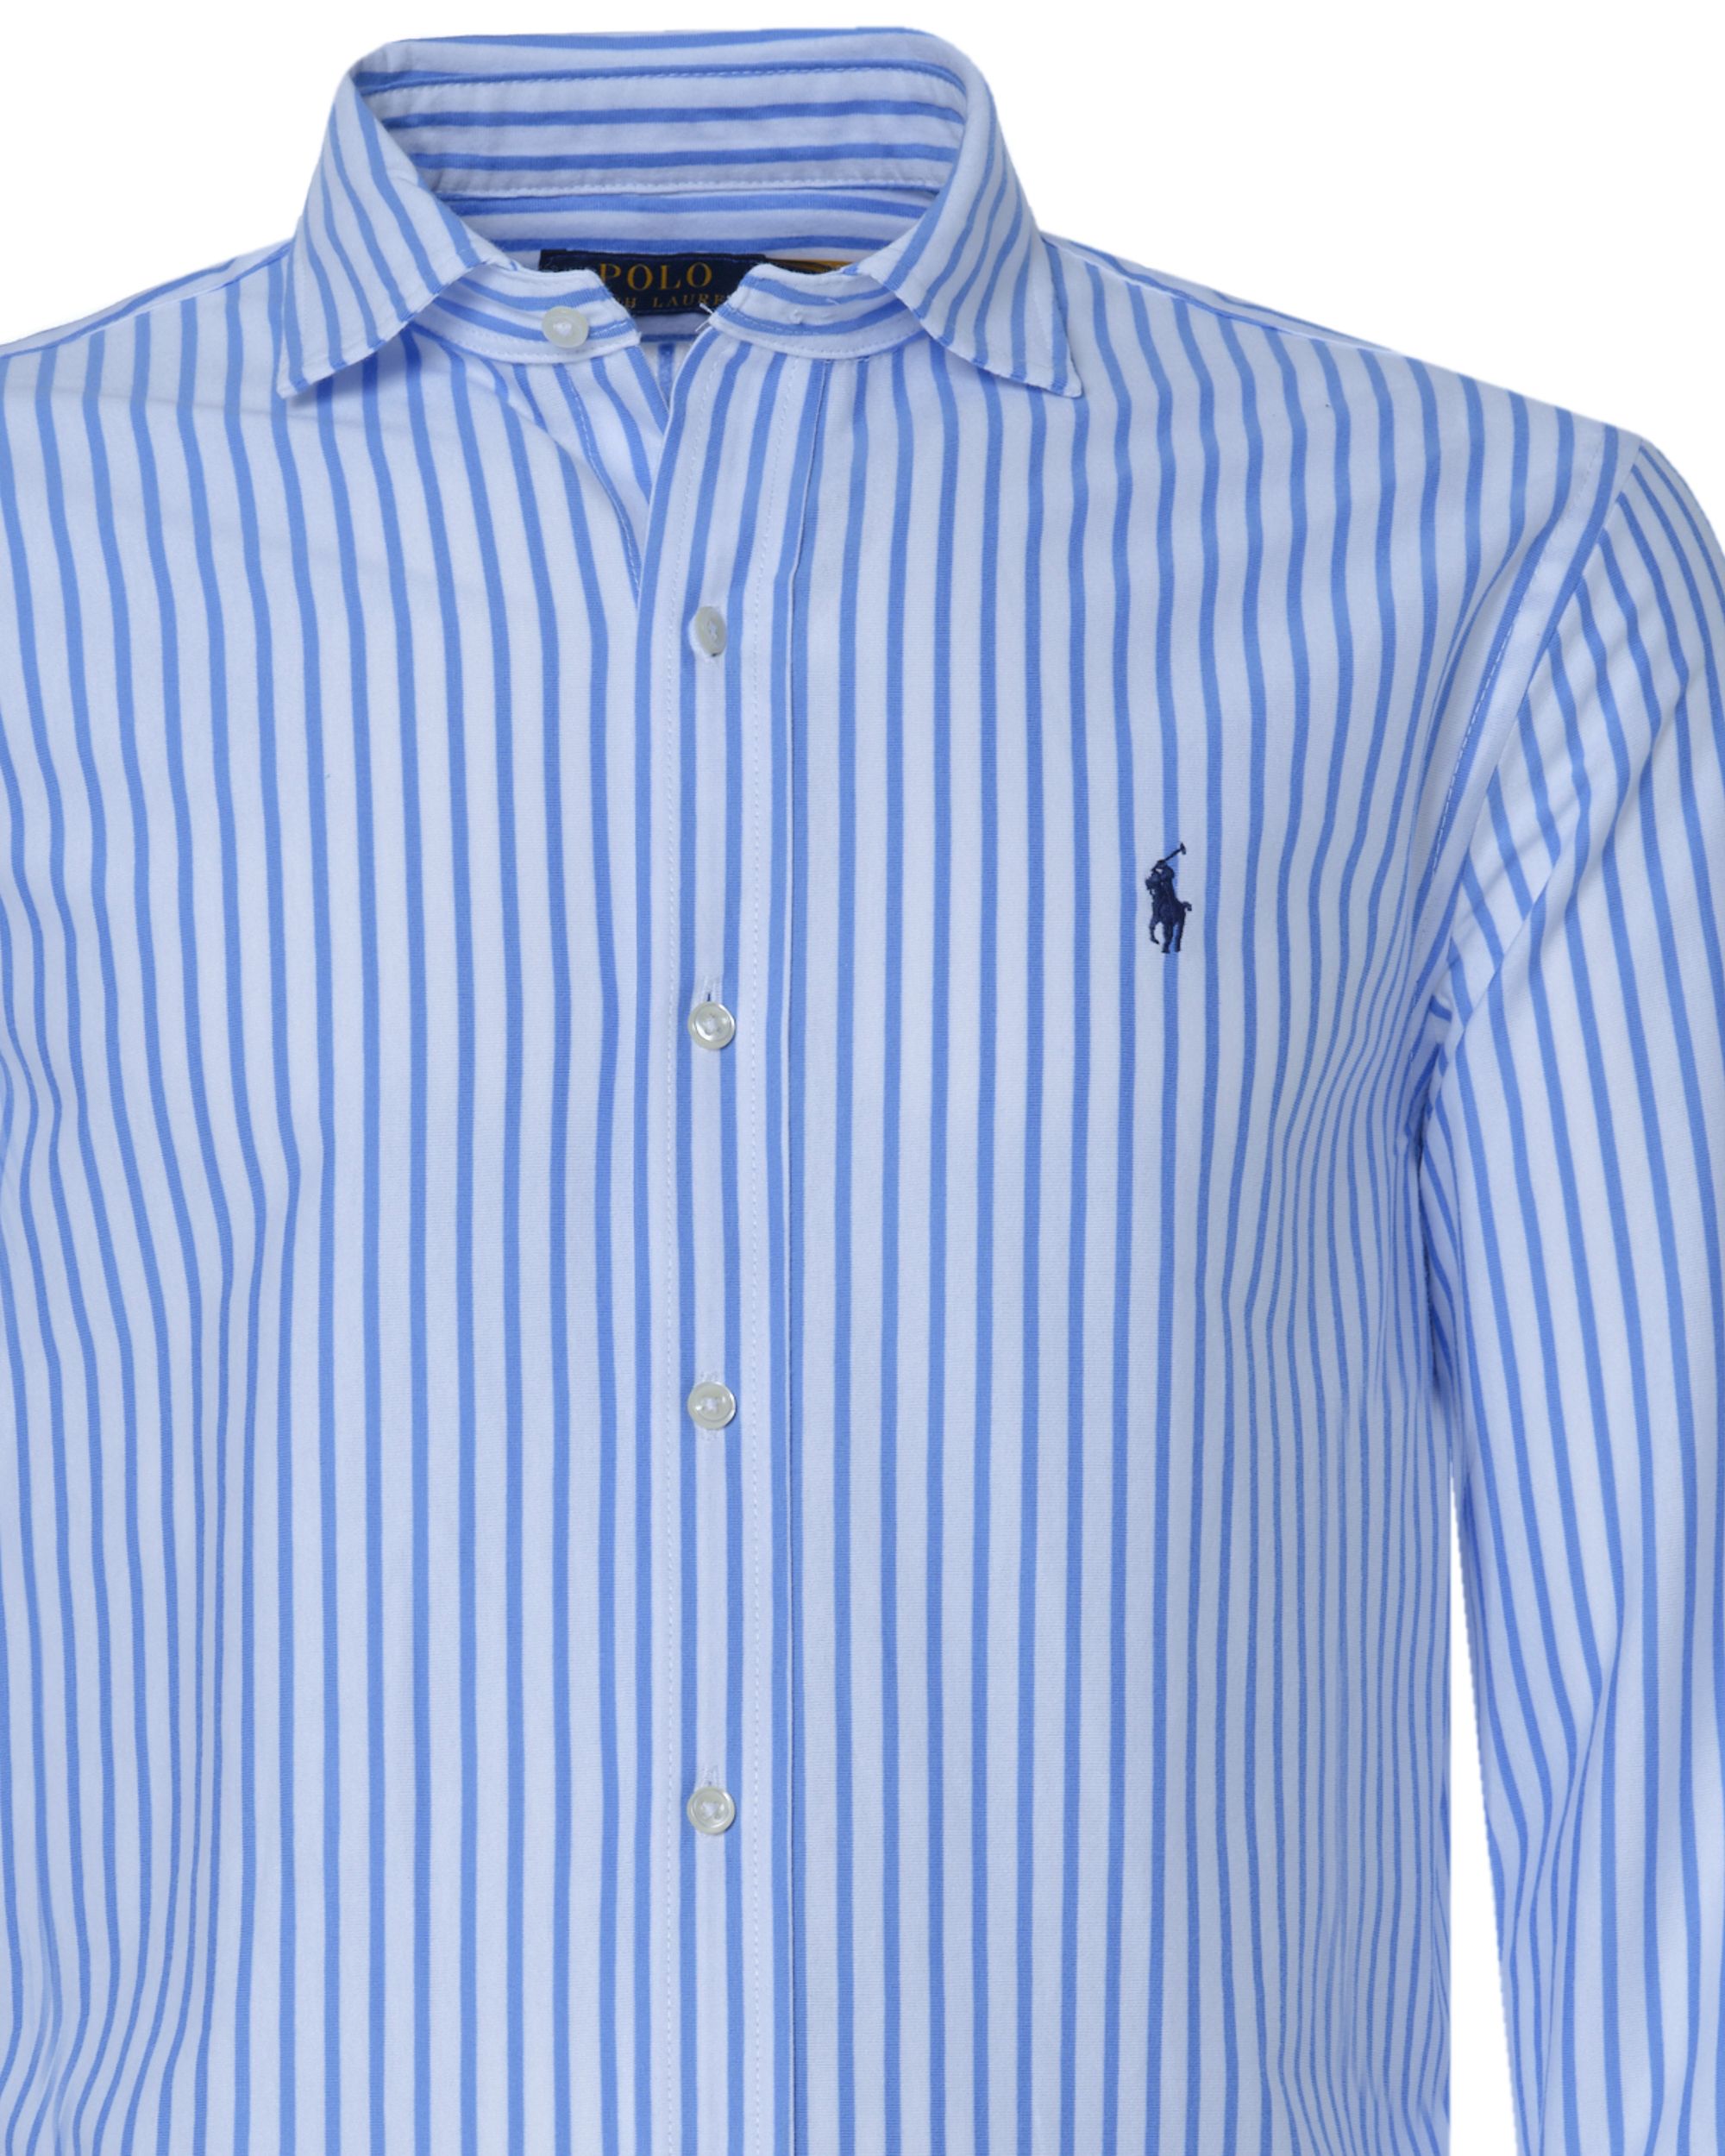 Polo Ralph Lauren Casual Overhemd LM Blauw 077970-001-L